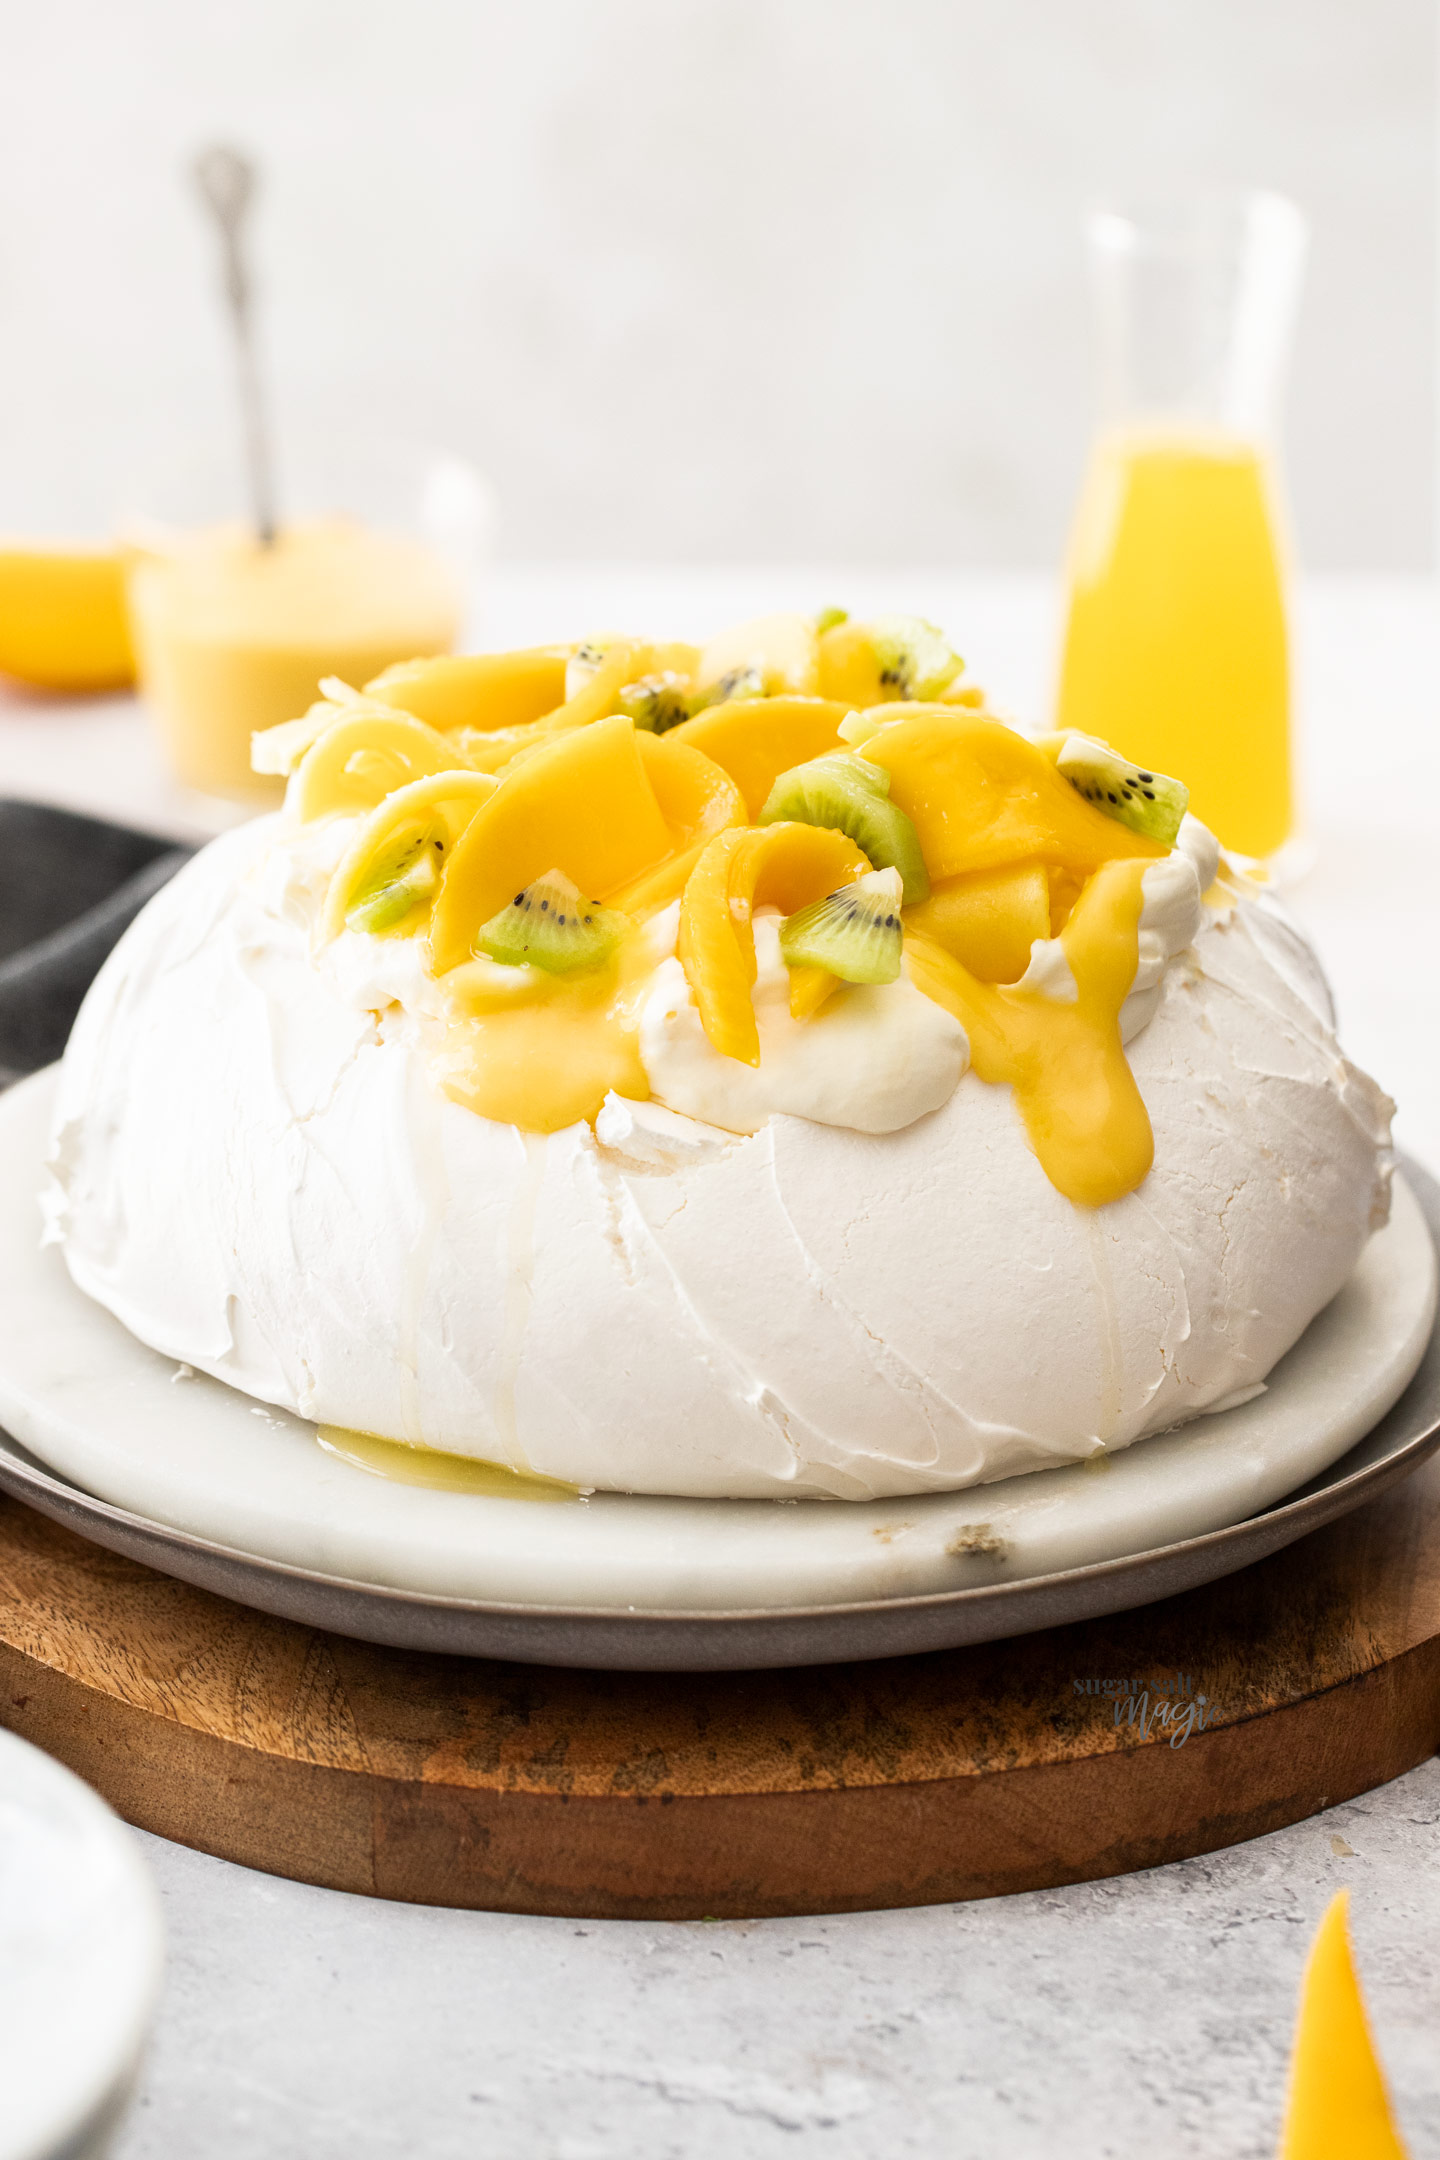 A whole pavlova topped with mango and cream.